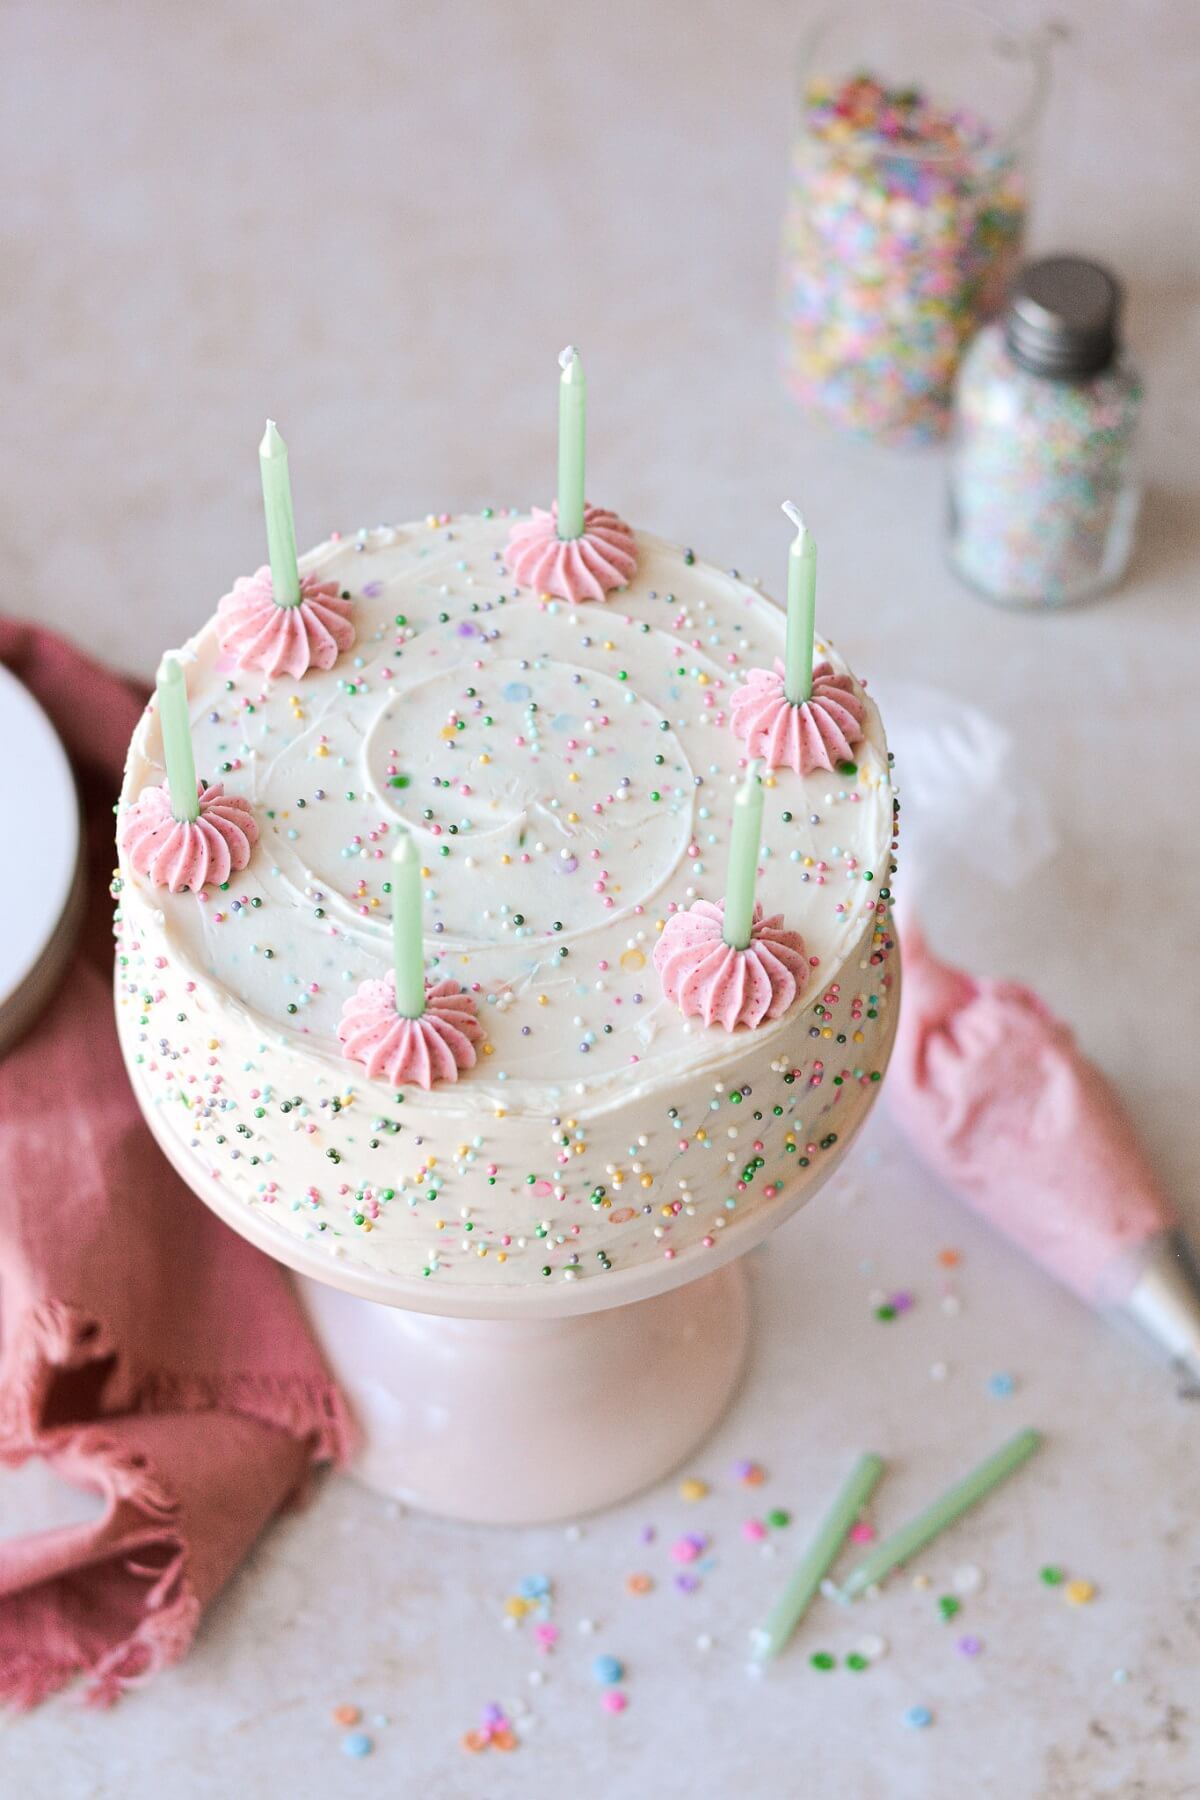 Mini funfetti cake with green birthday candles.